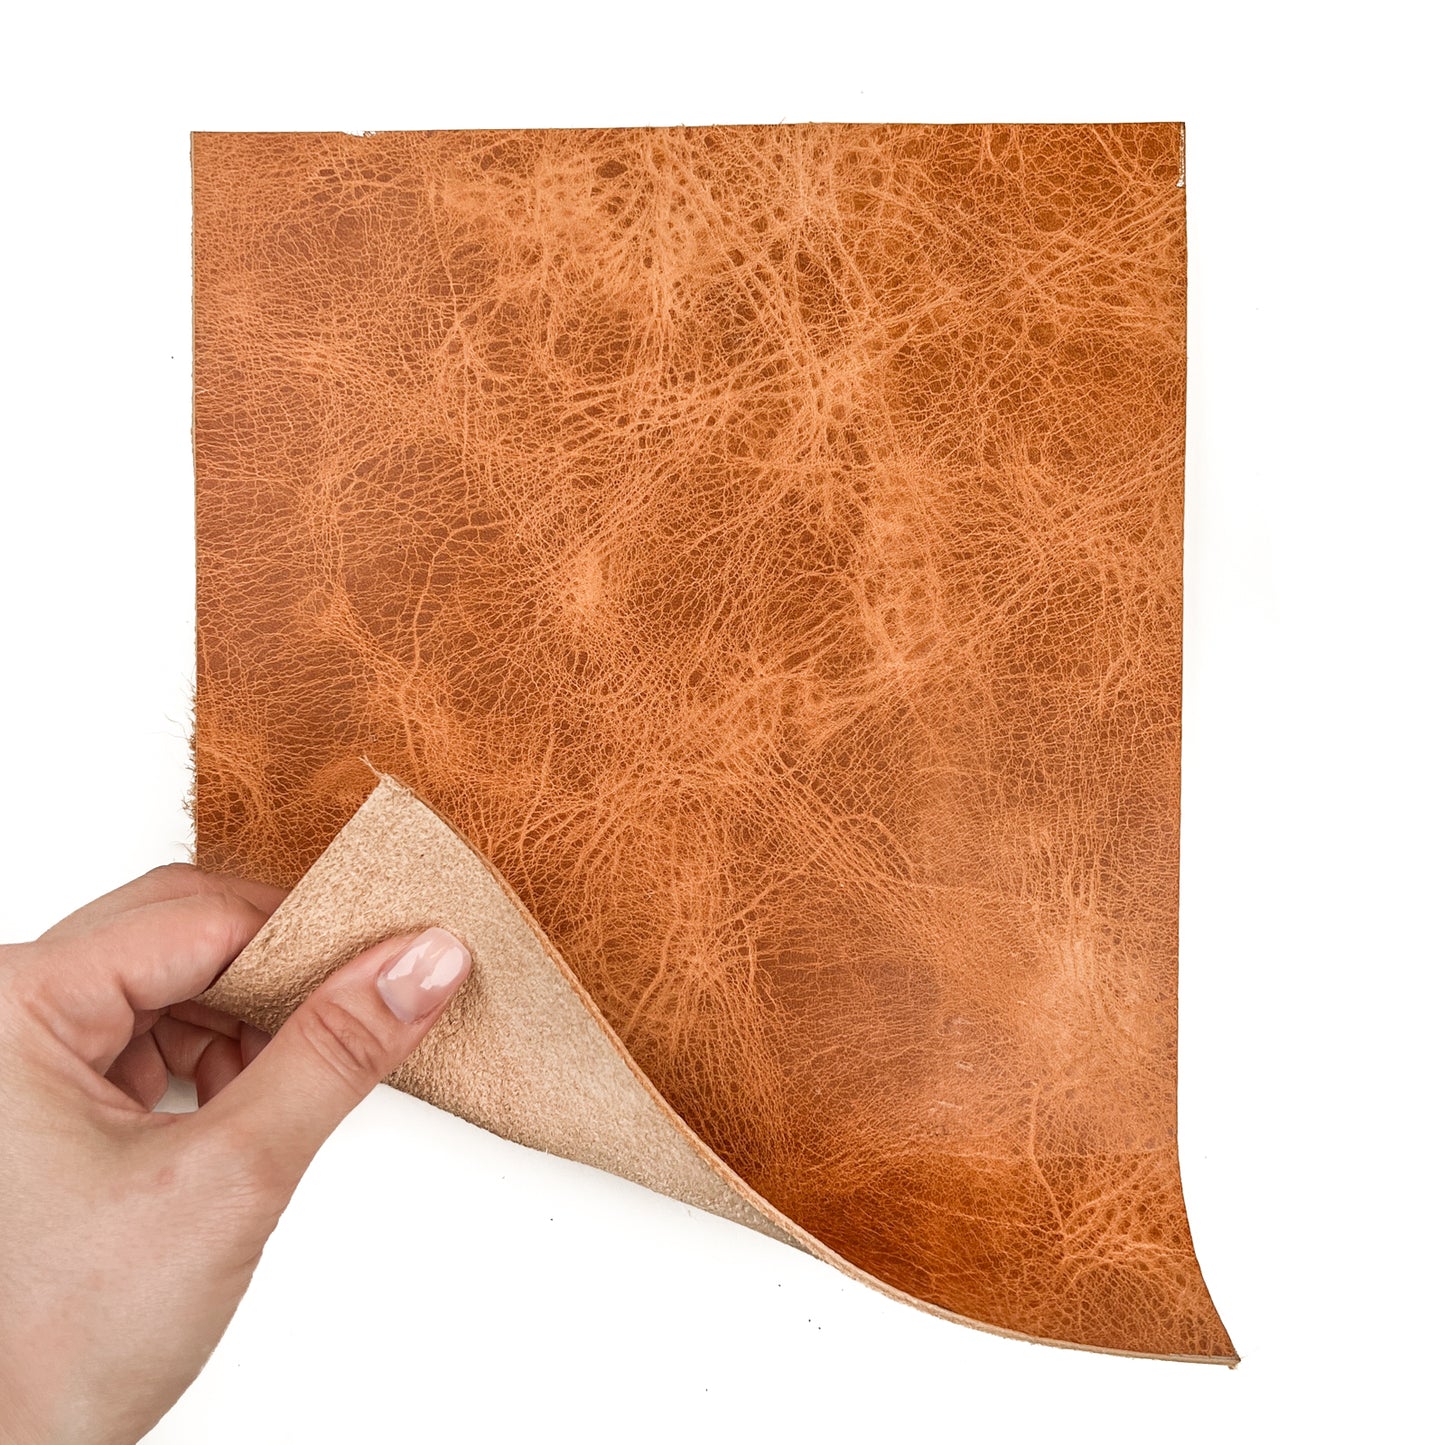 Light Brown Vintage Calf Veg Leather Sheets With Texture 1.6-1.8mm / VINTAGE VEG TAN 1454